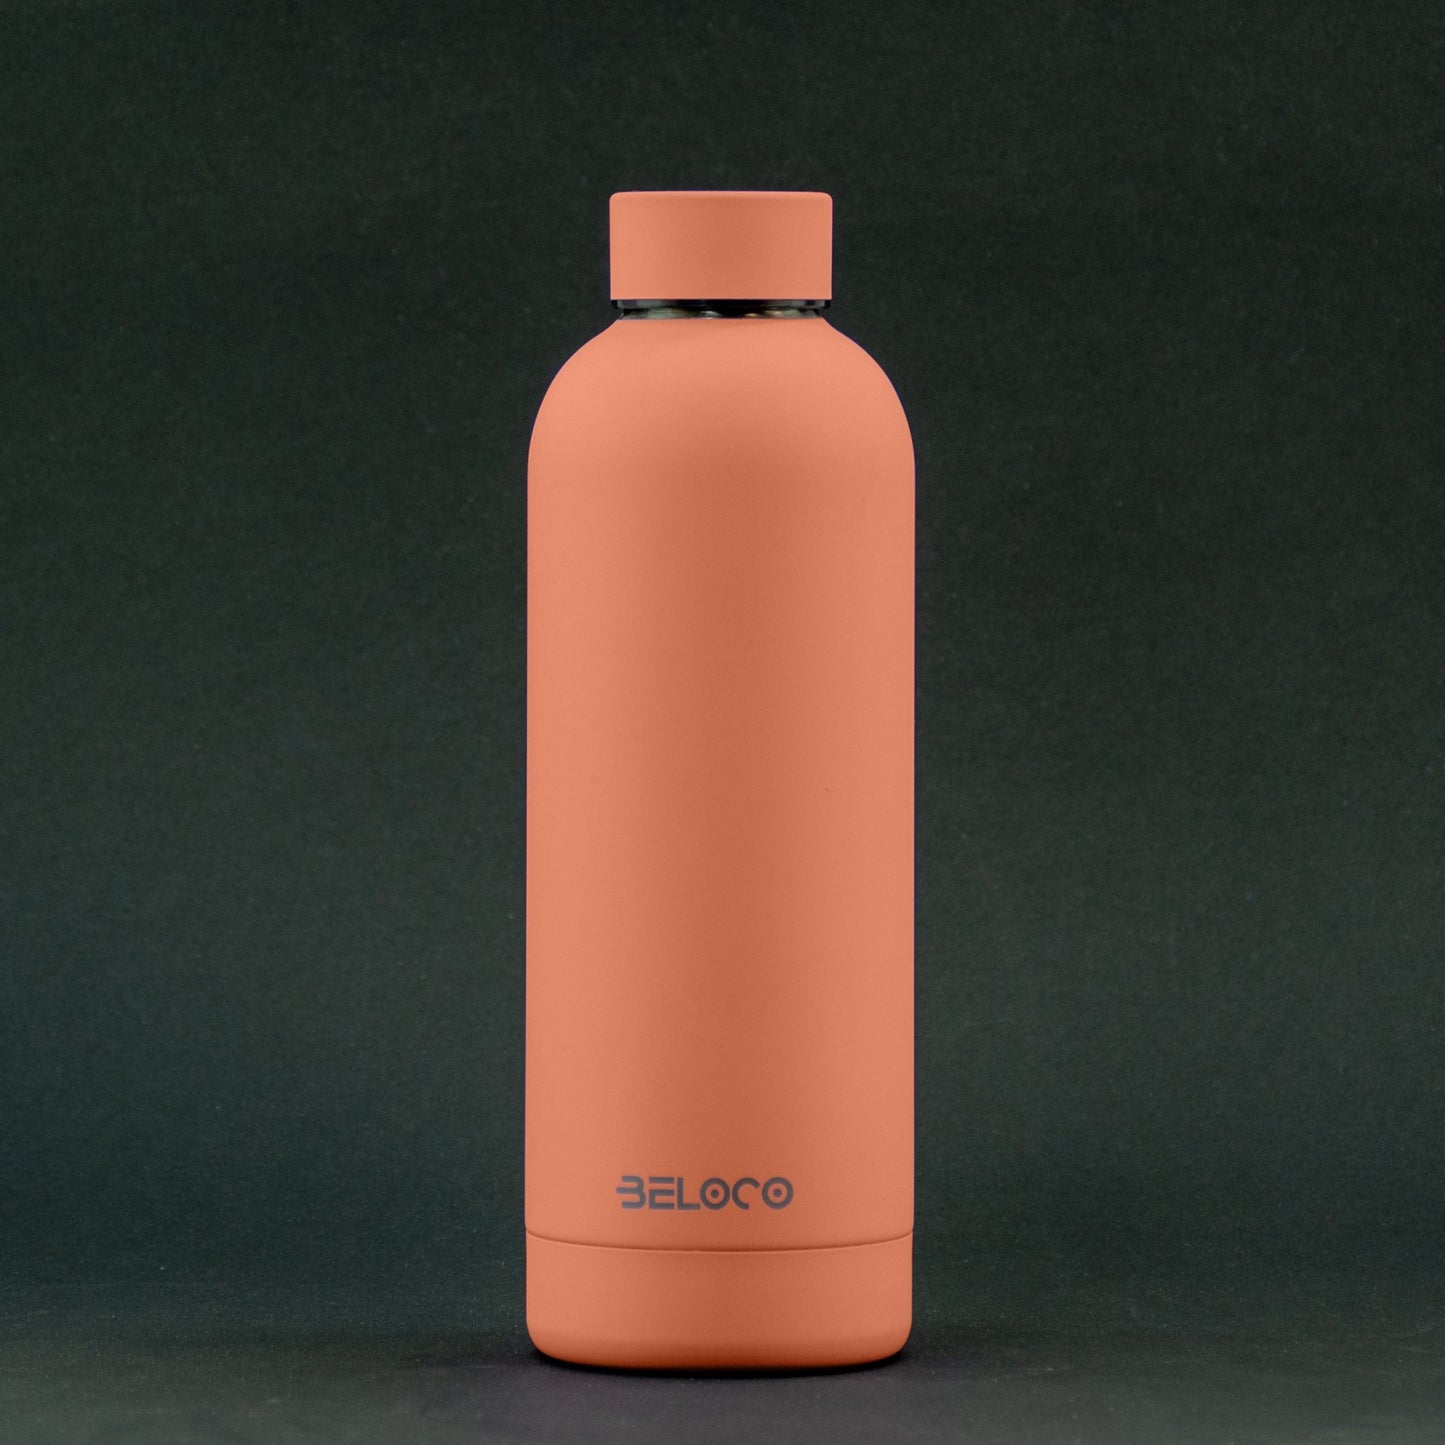 Ginger bottle - 500 ml - BeLoco